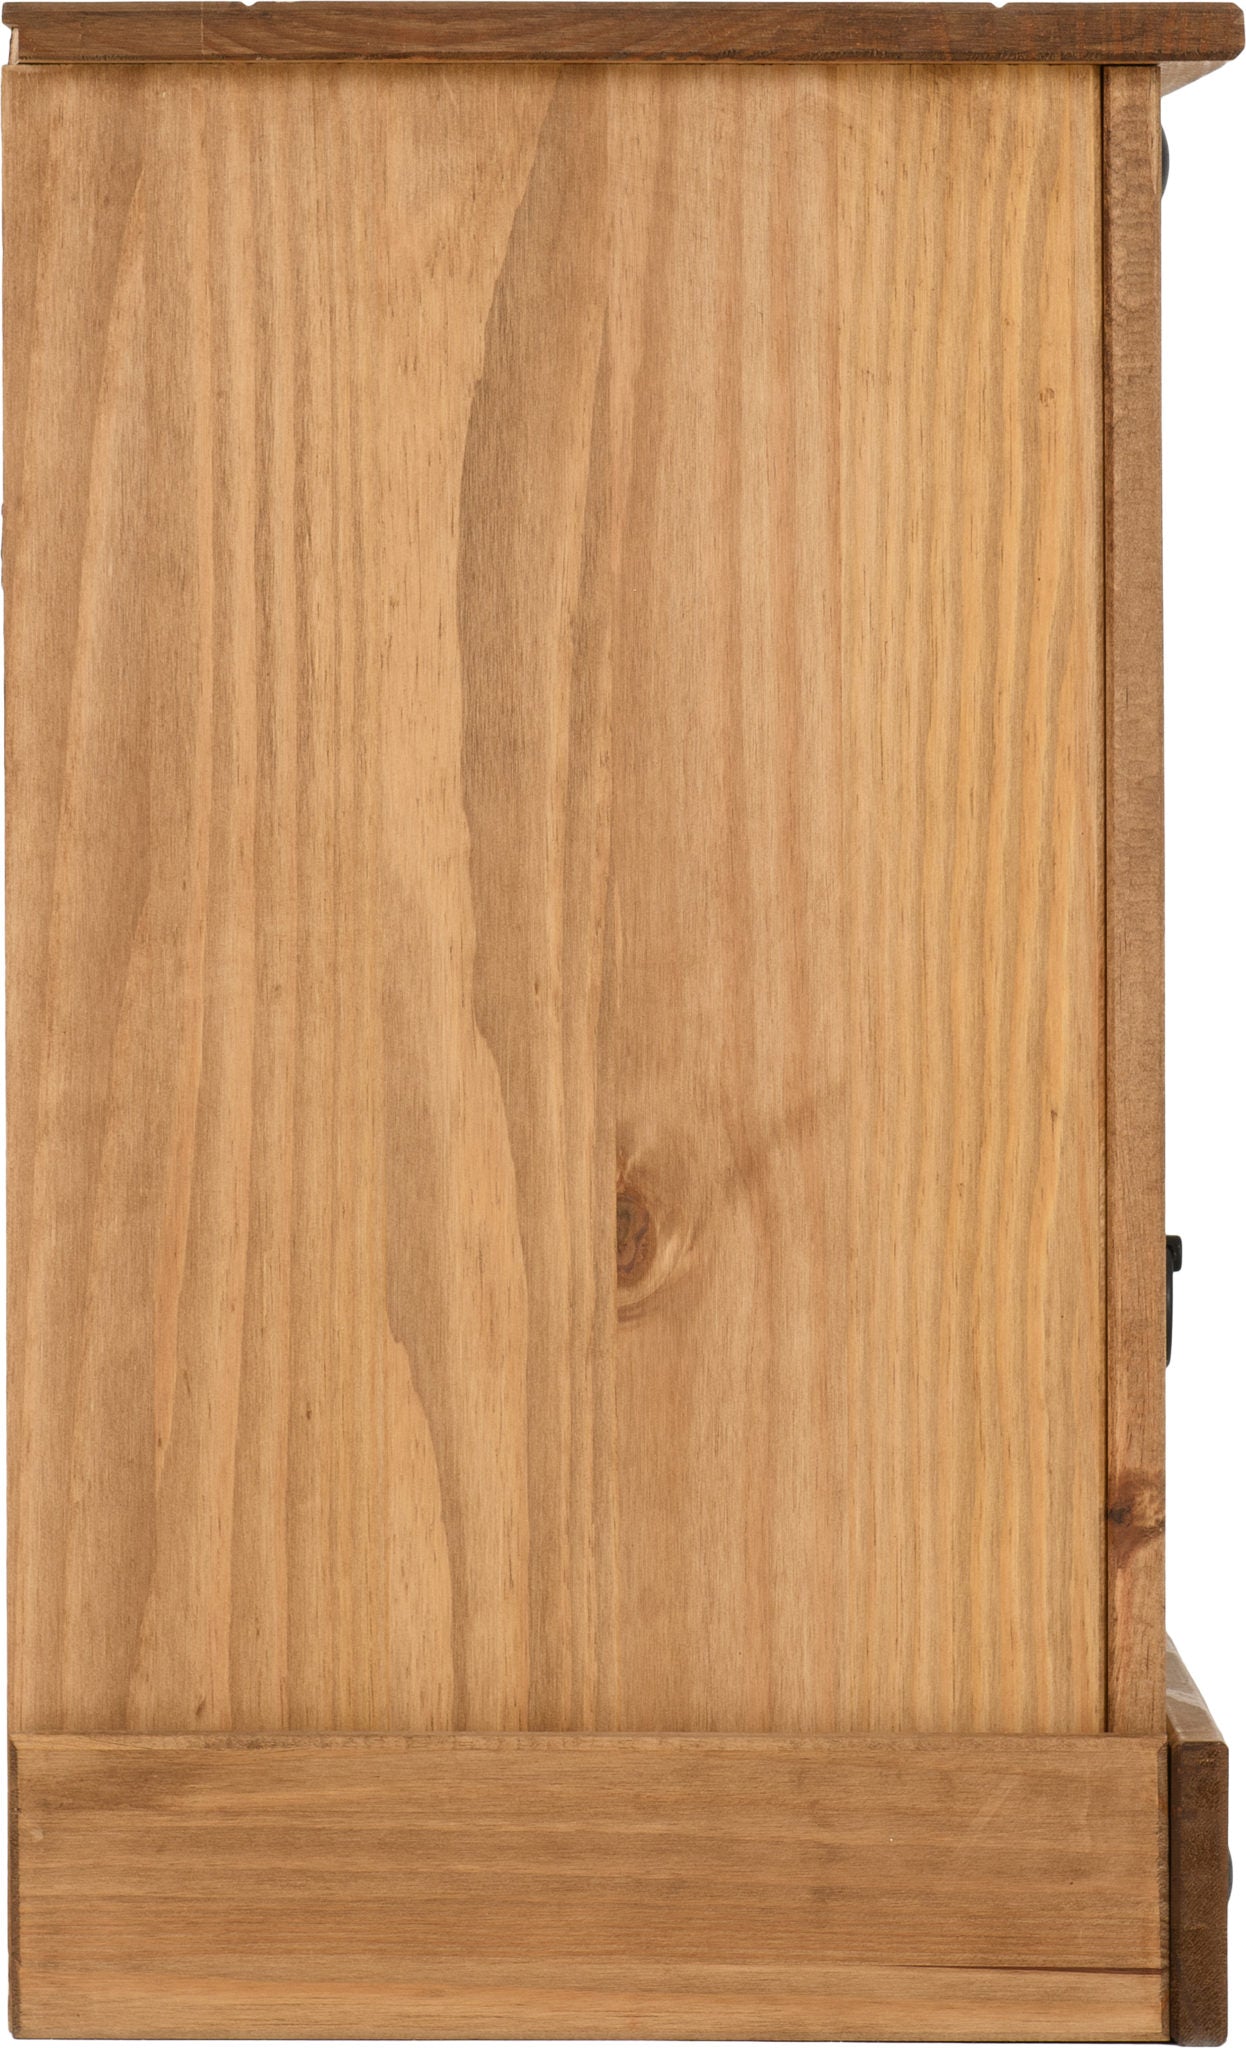 Corona Bedside Table- Distressed Waxed Pine